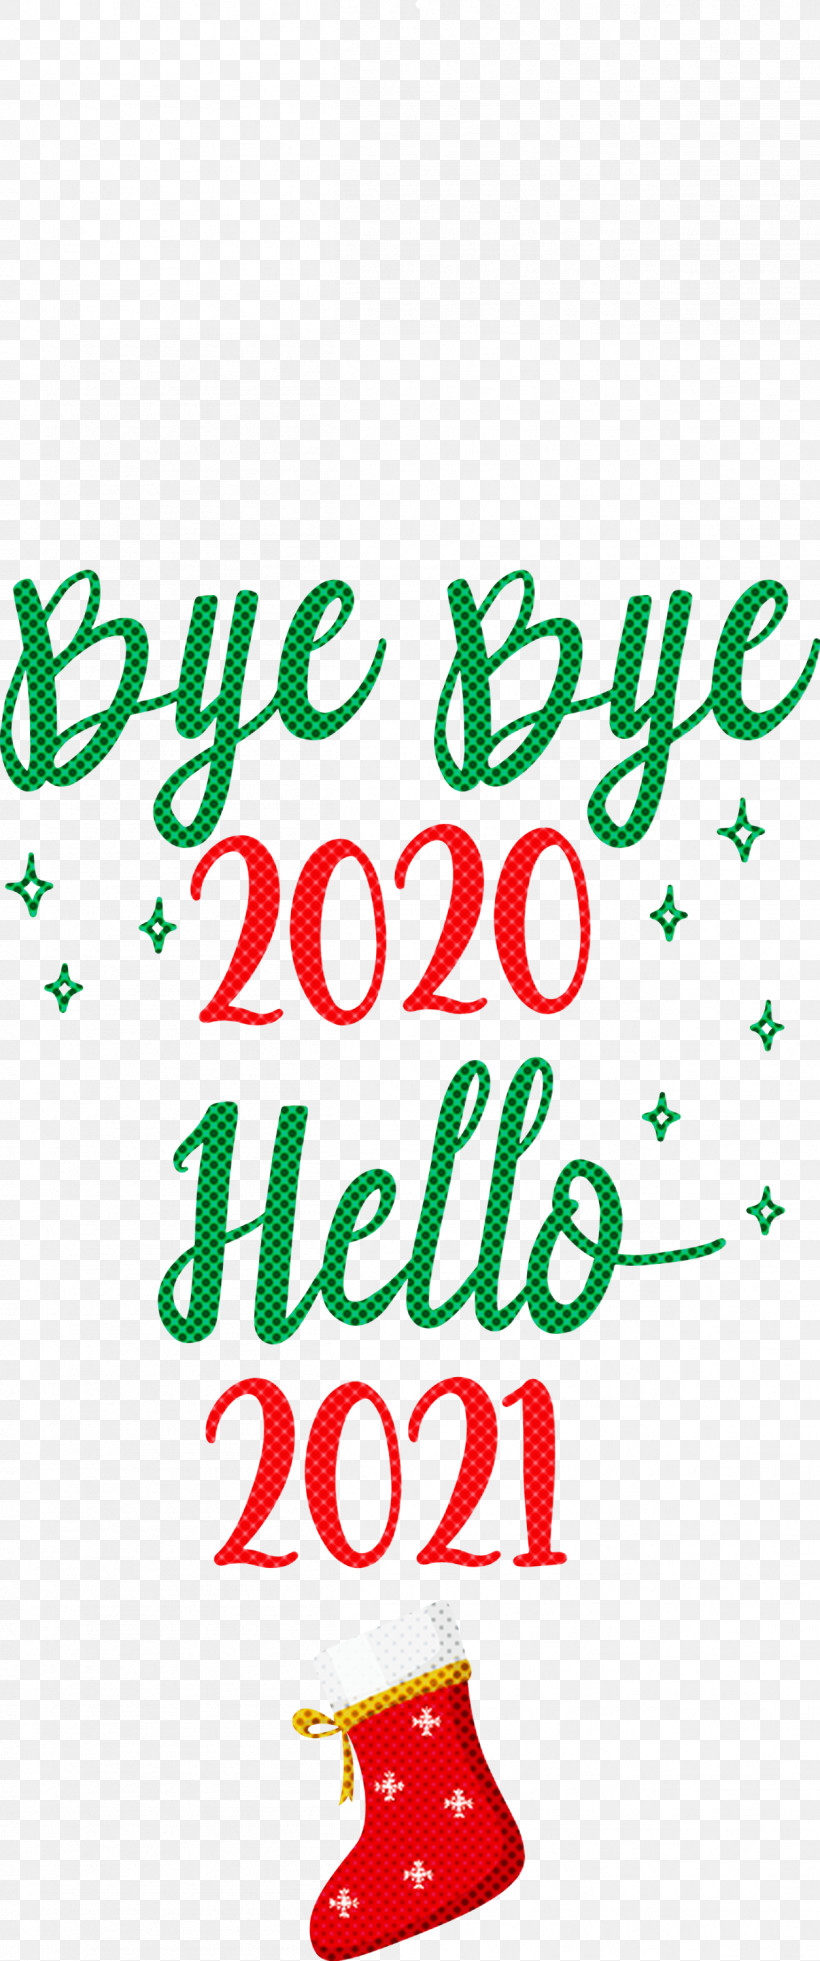 Hello 2021 Year Bye Bye 2020 Year, PNG, 1254x2999px, Hello 2021 Year, Bye Bye 2020 Year, Creativity, Geometry, Happiness Download Free